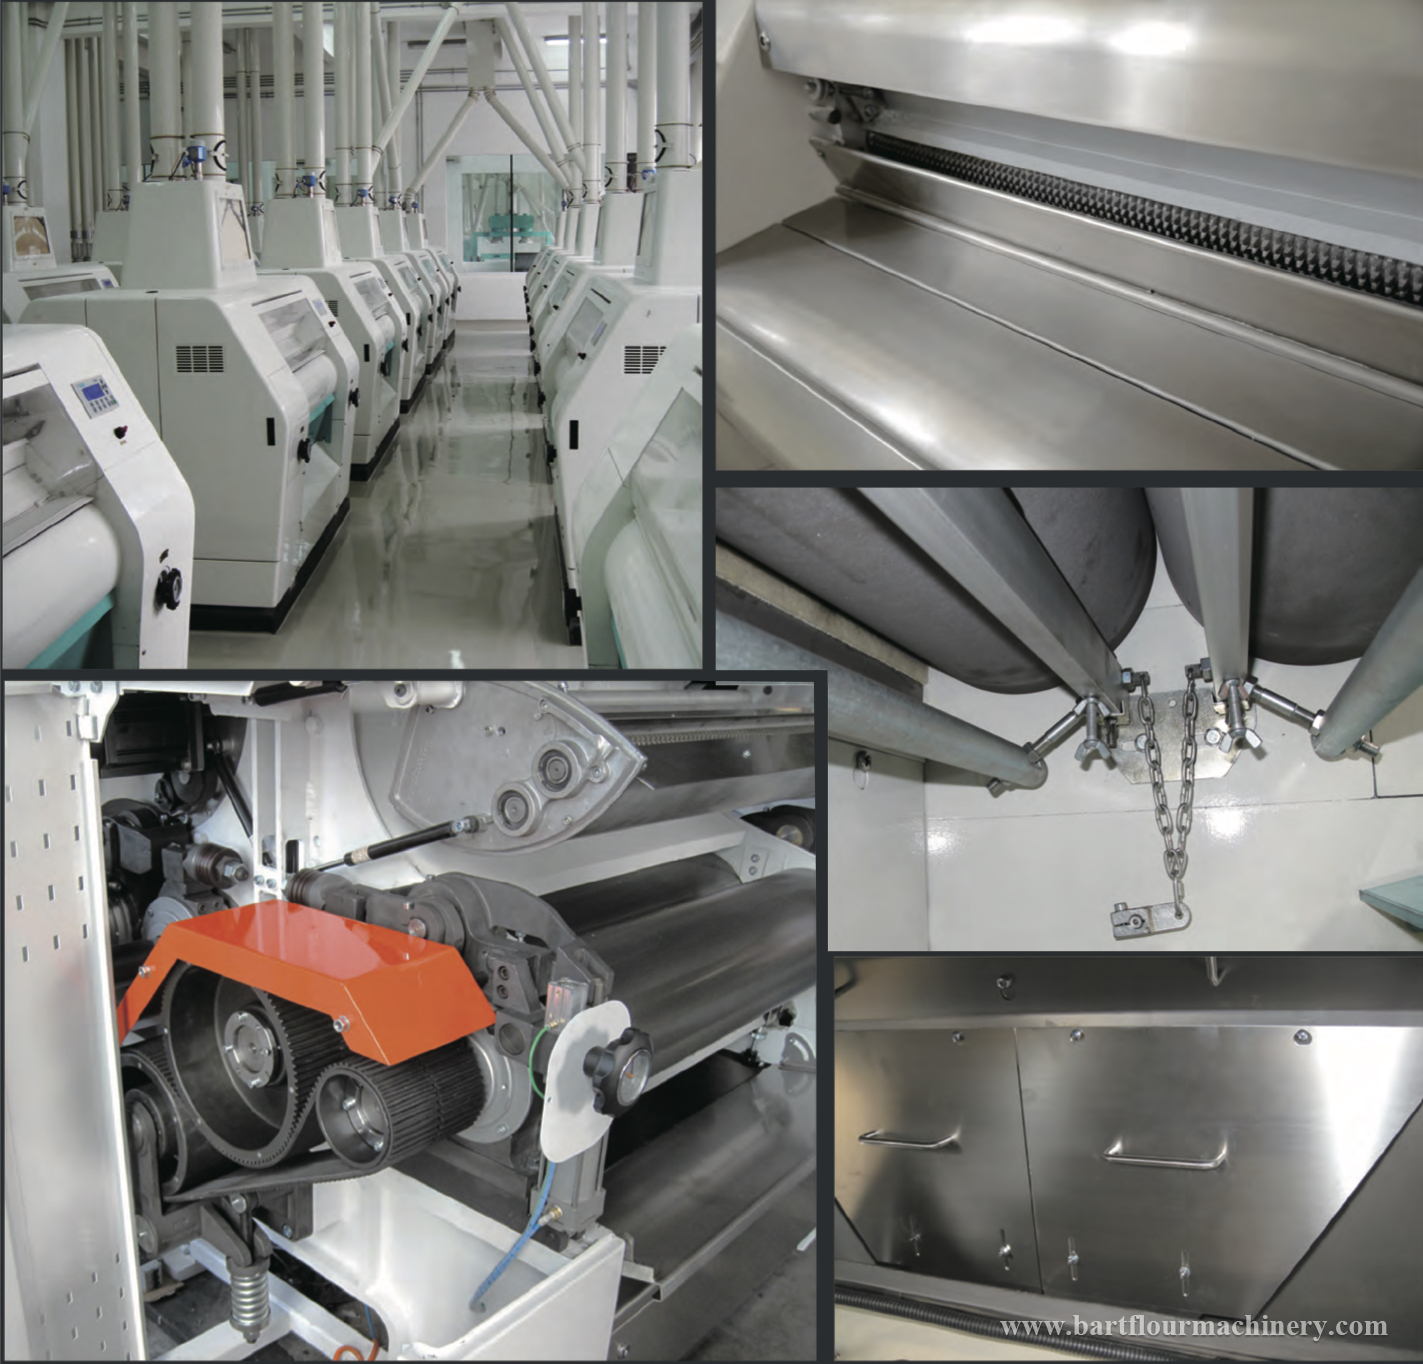 China made Top Grade Quality Flour Mill Roller mills Rollstands